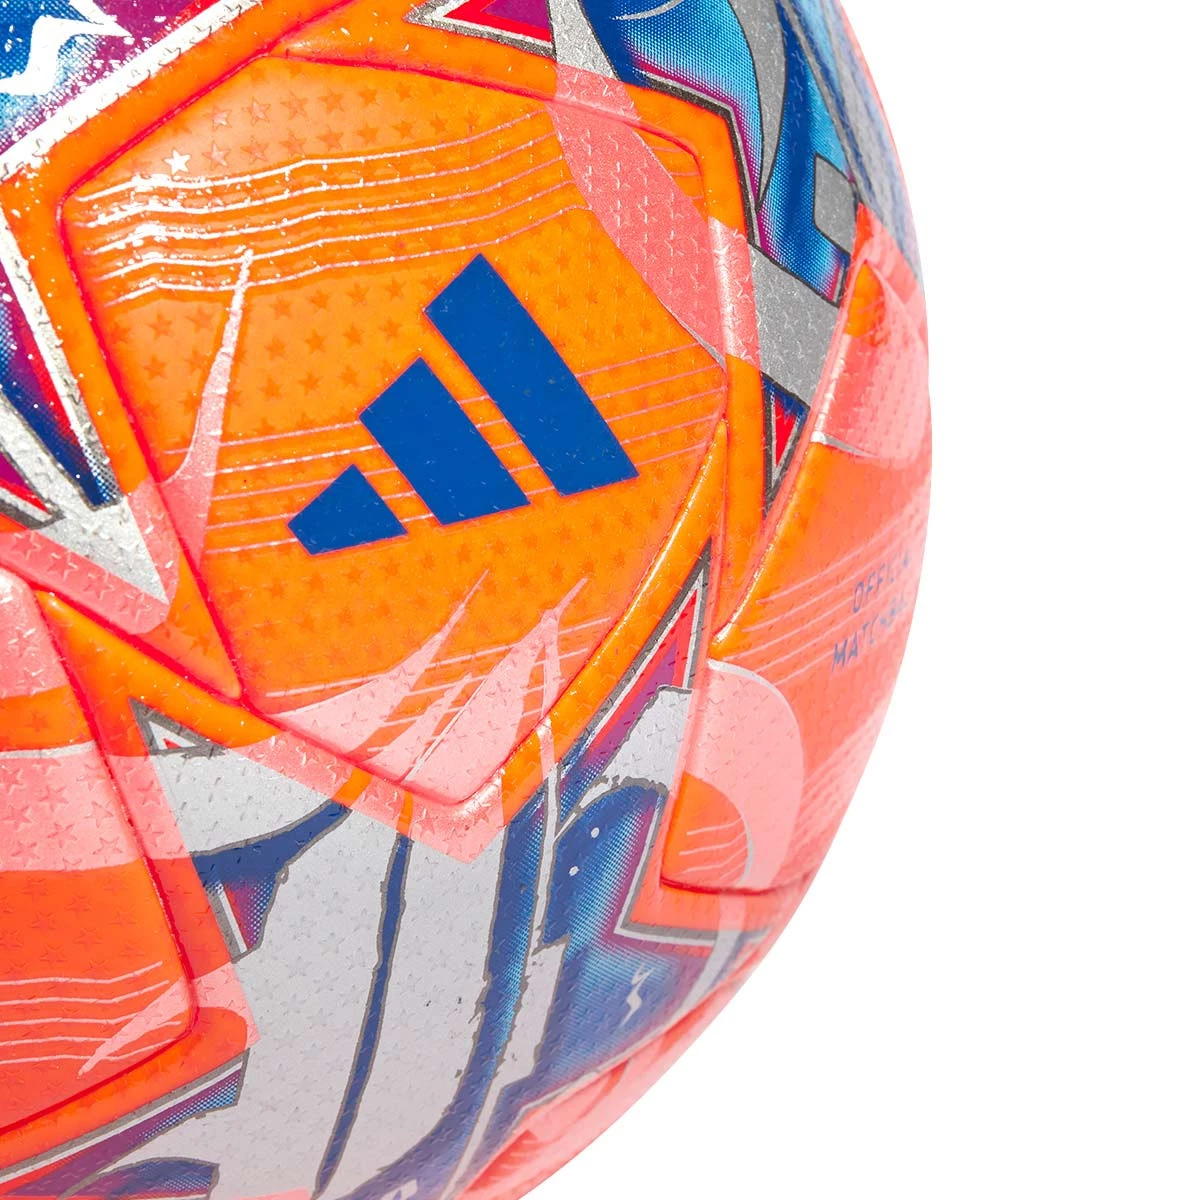 Ball adidas Oficial Champions League 2023-2024 Solar Orange - Fútbol Emotion